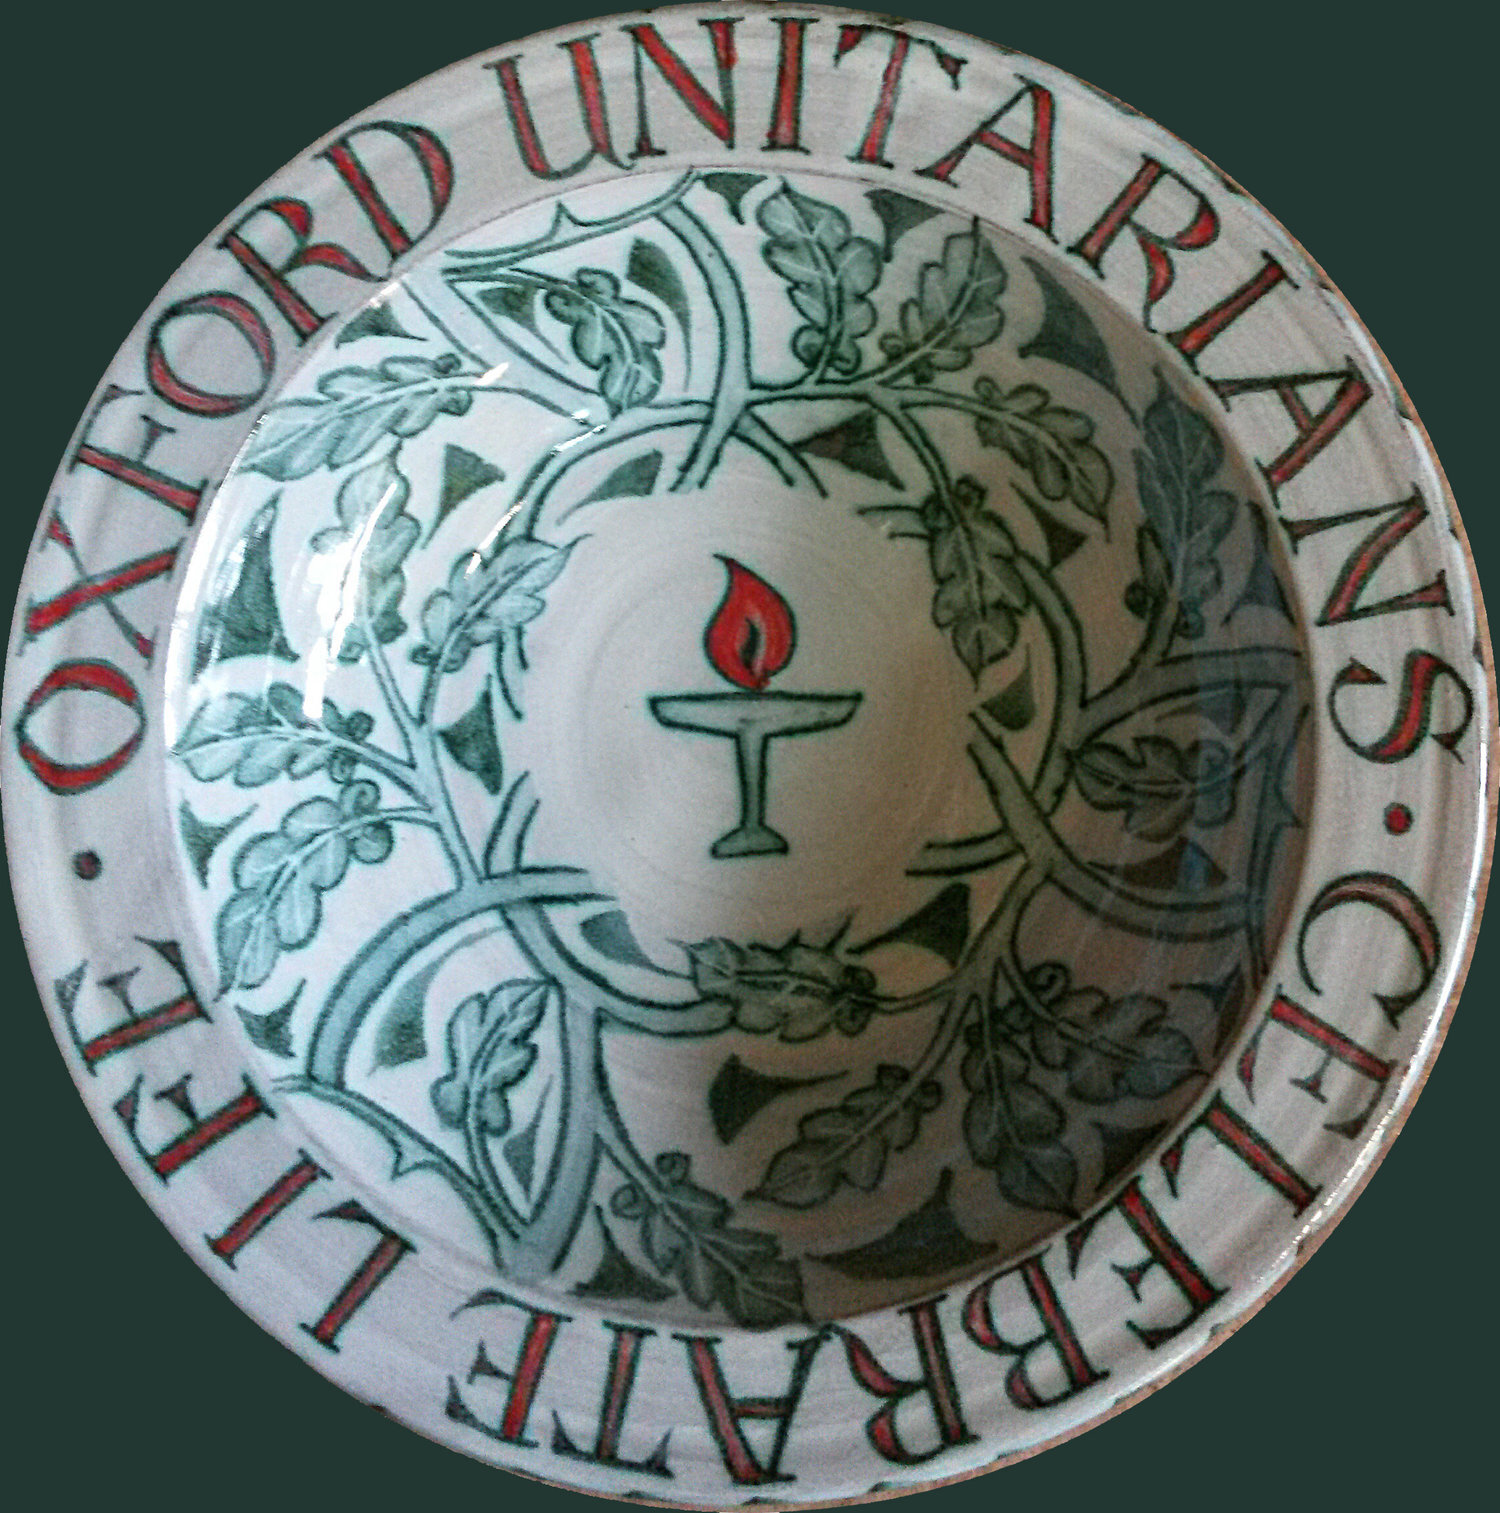  Oxford Unitarians 